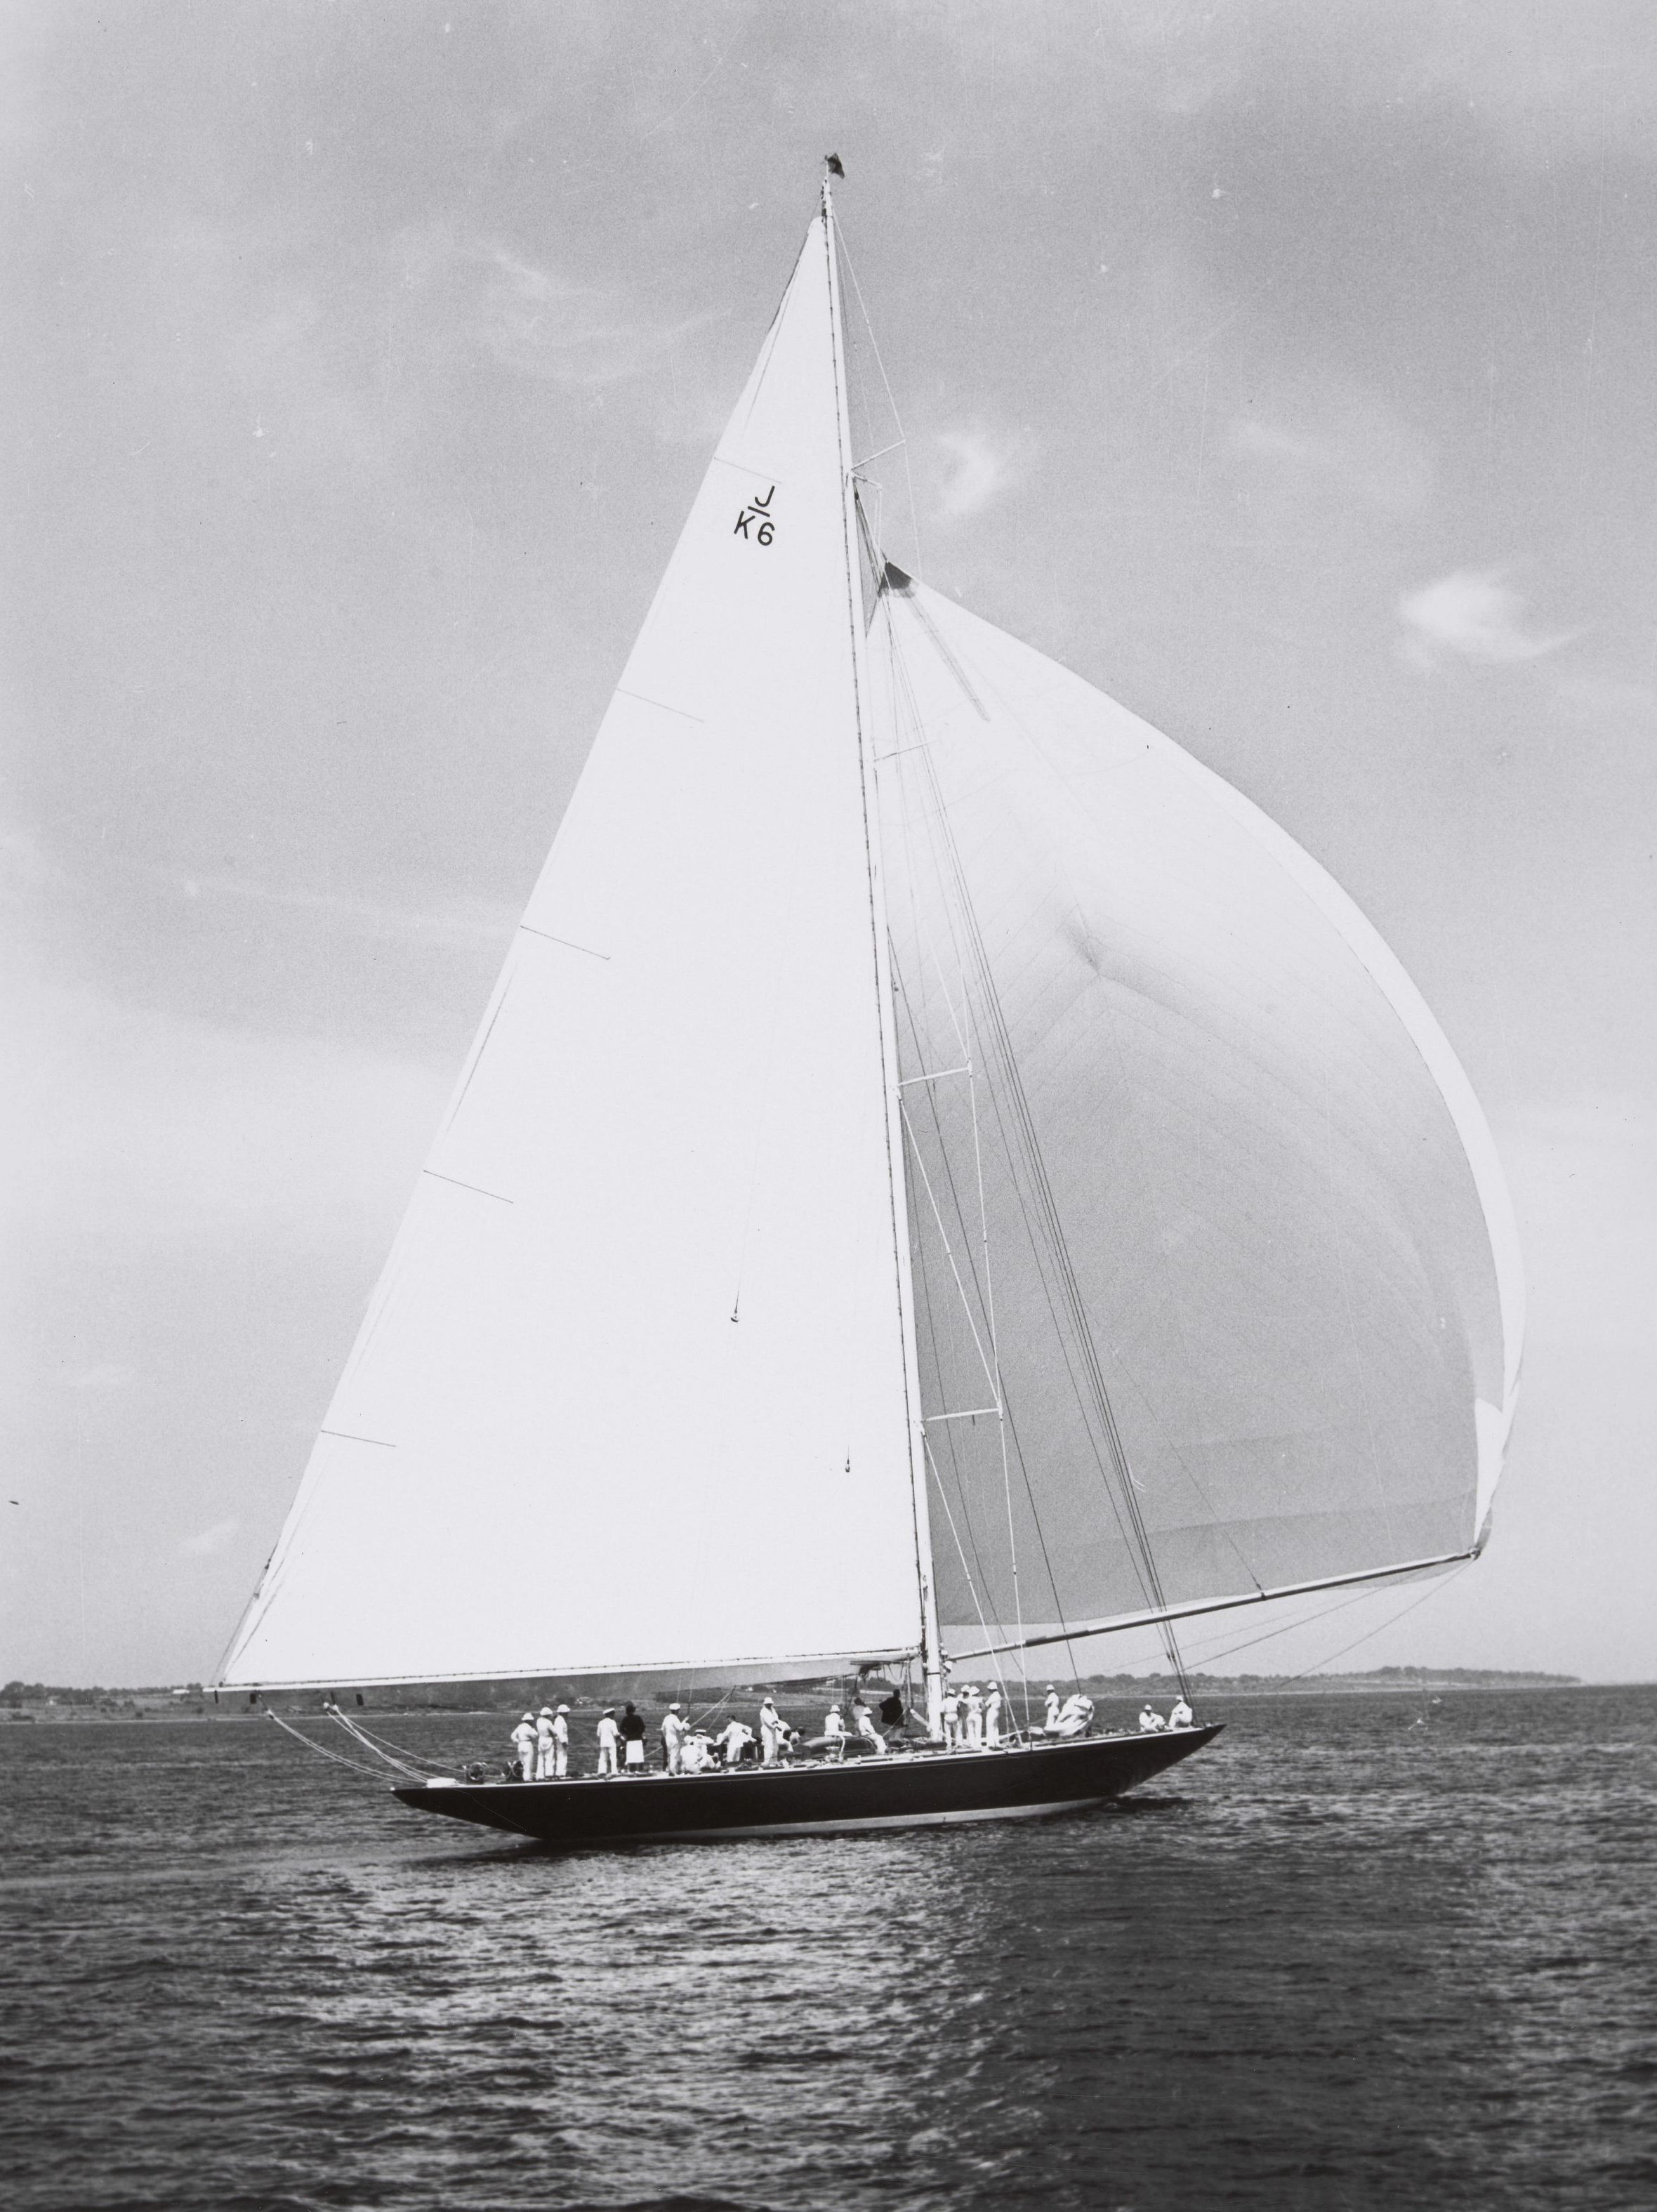 Black and white image of a large sail boat at sea.